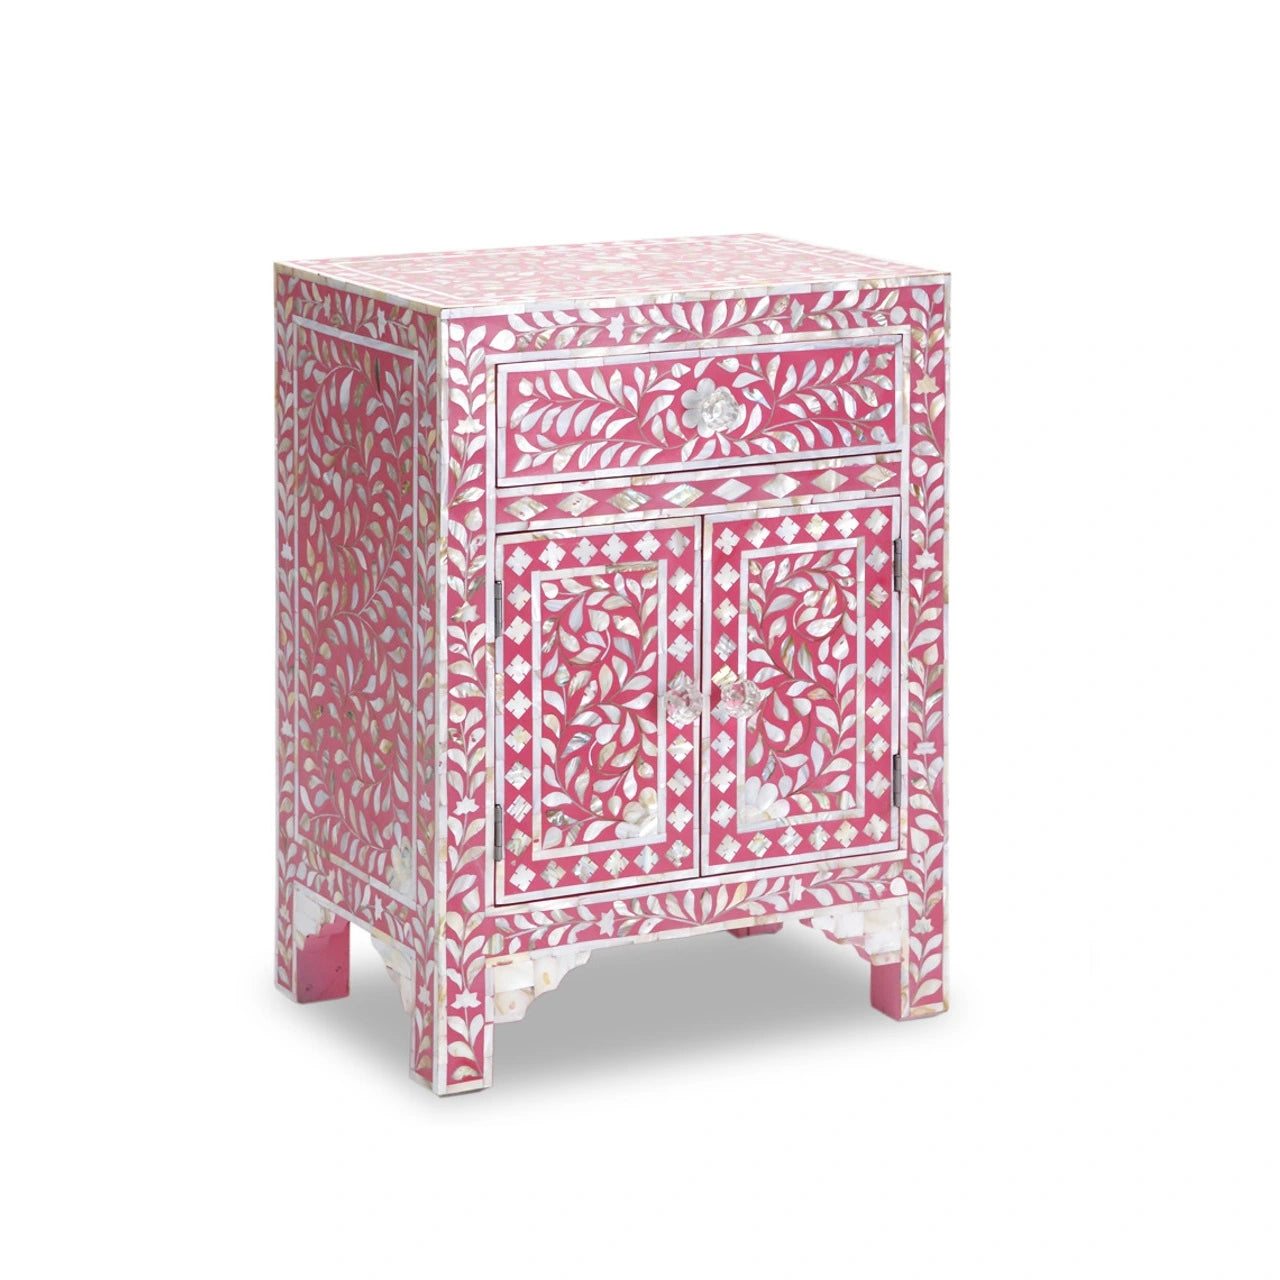 Handmade Pink Mother of Pearl handmade vintage bedside table for living room